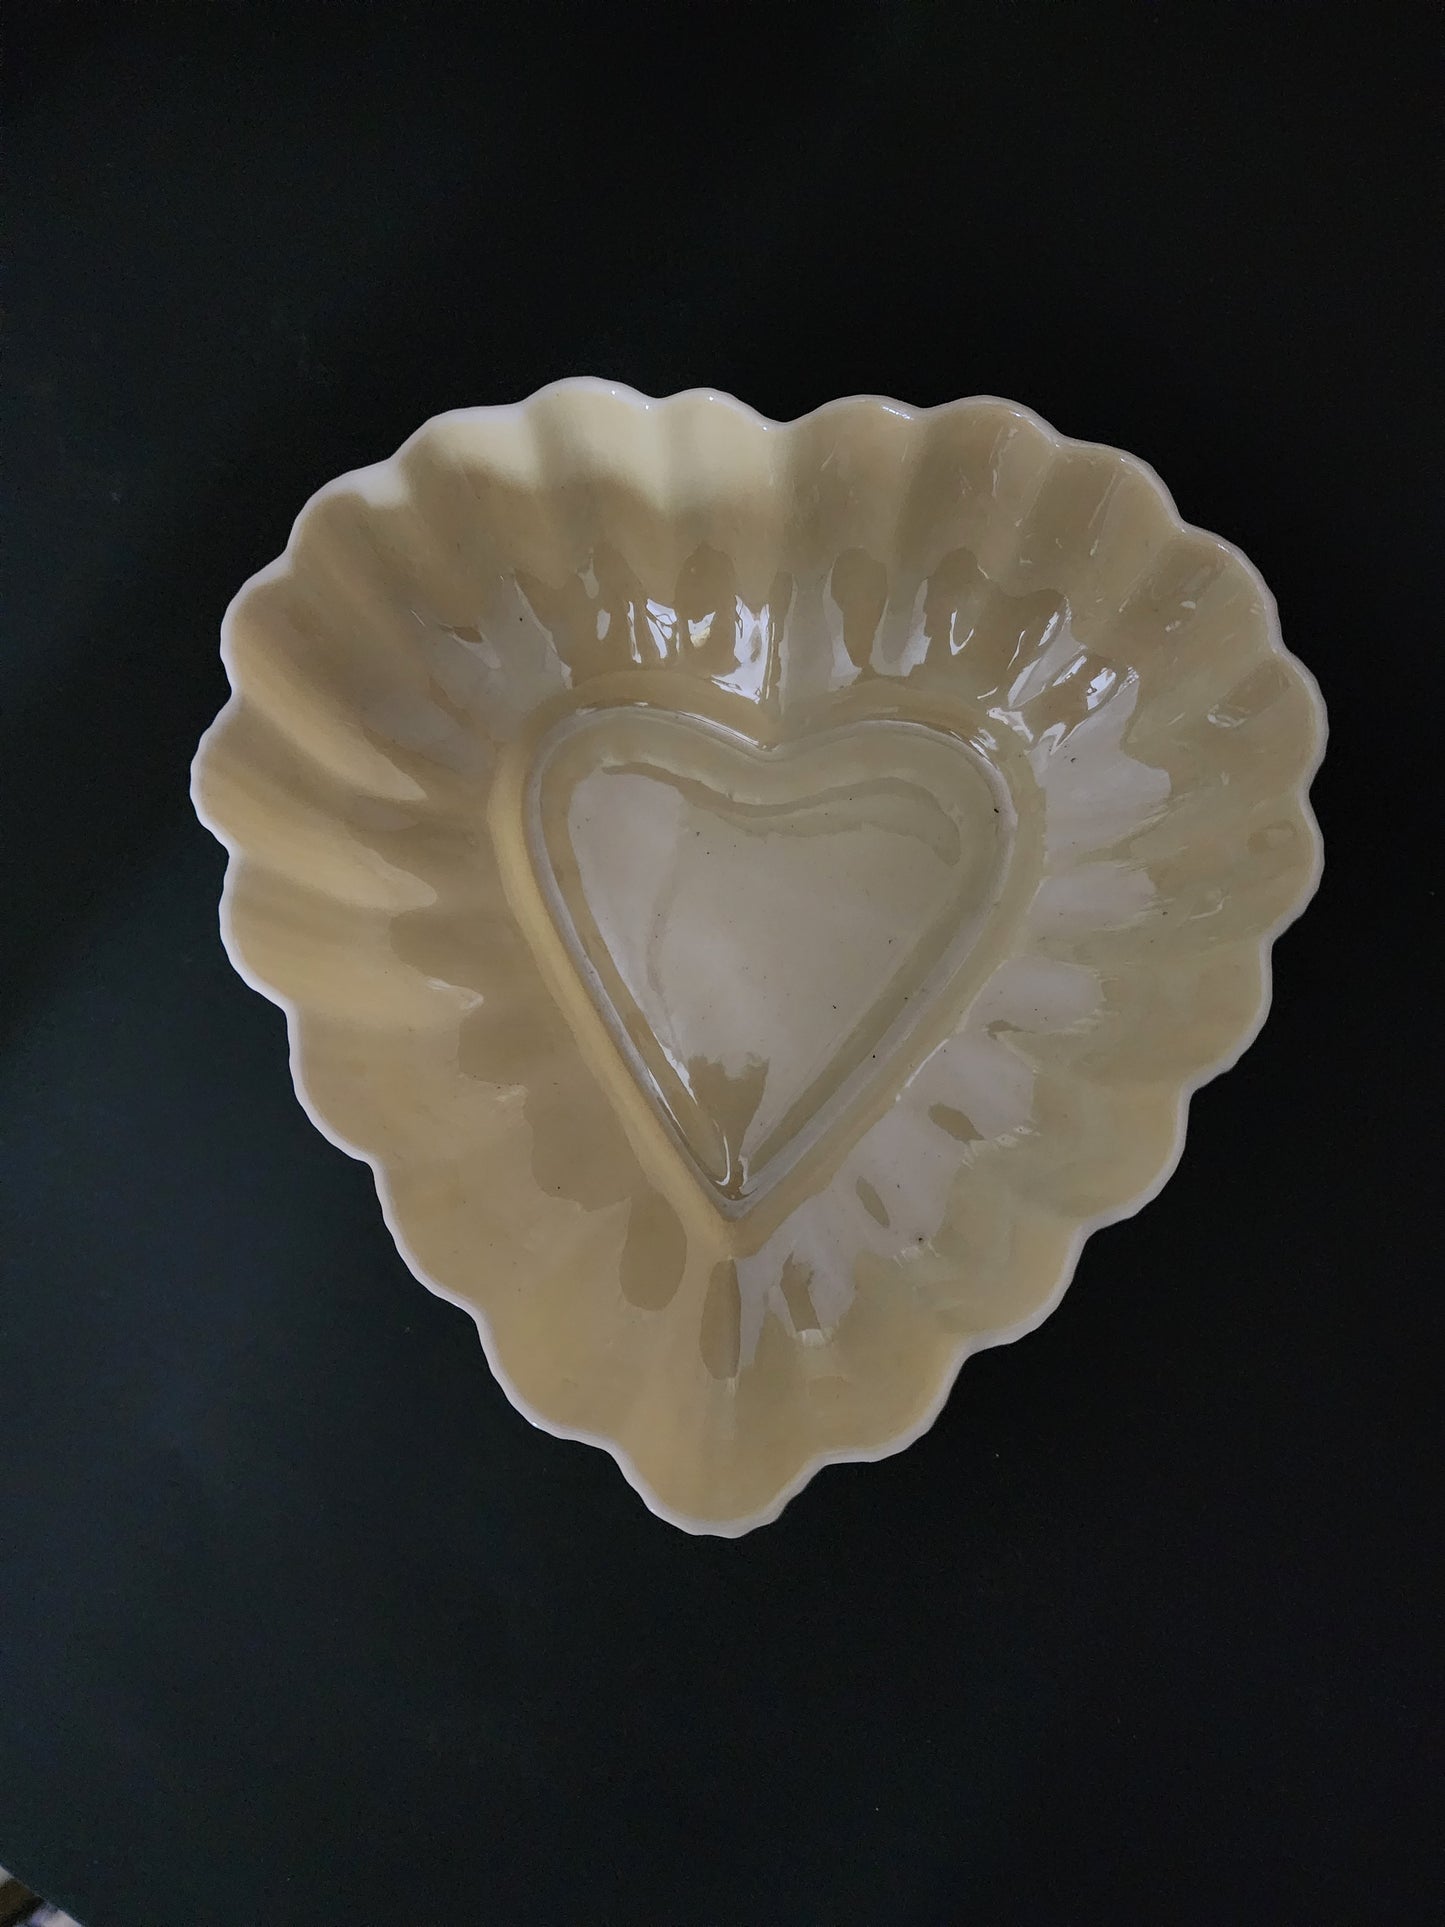 Belleek heart shaped dish Ireland